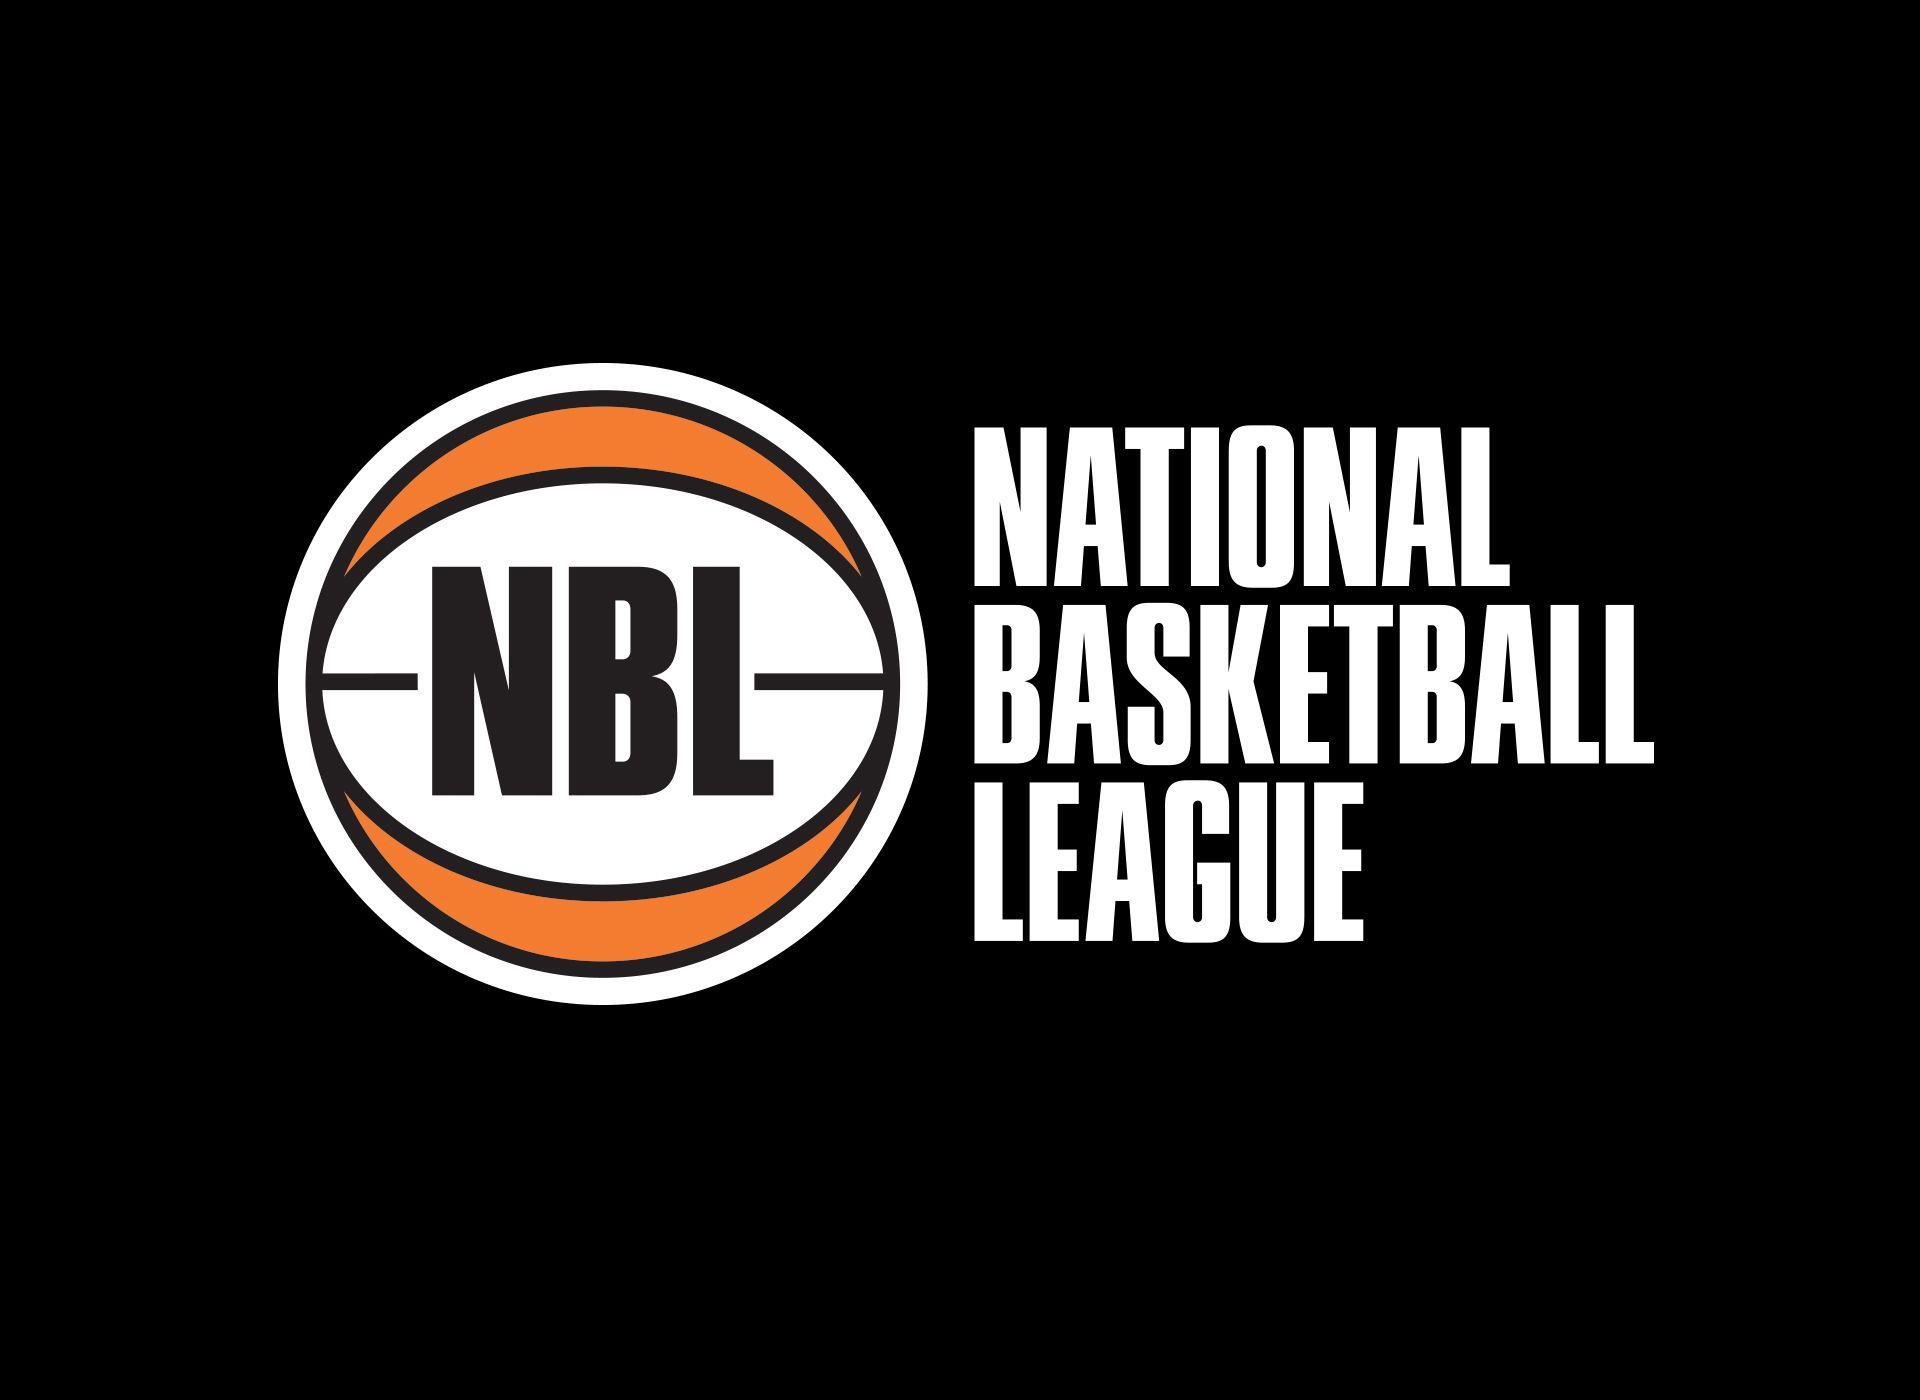 NBL Logo - National Basketball League